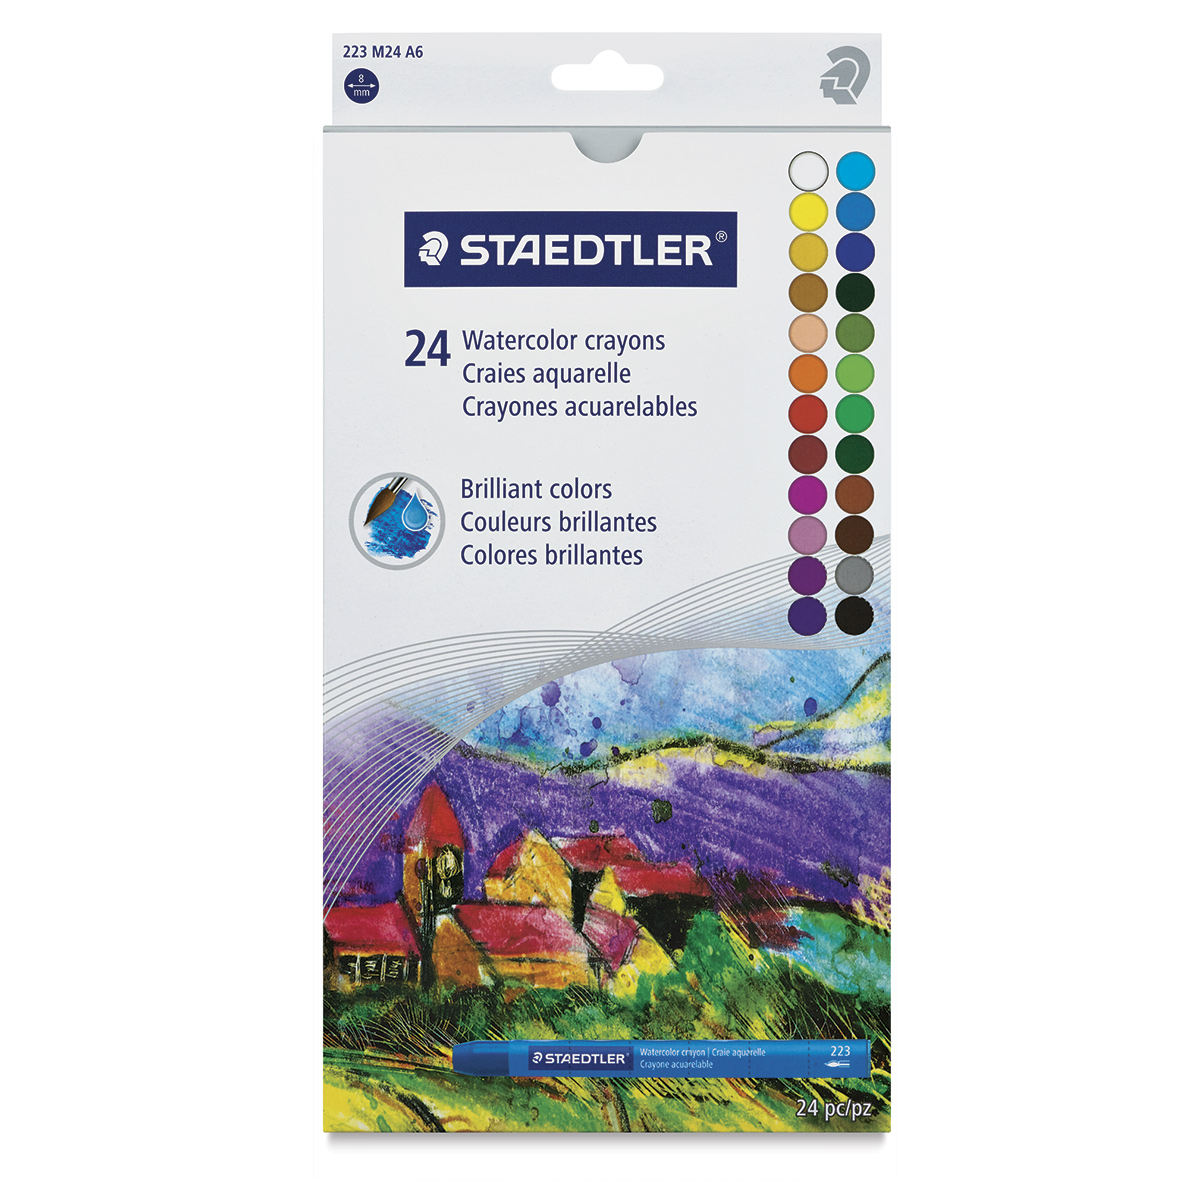 Staedtler Lumocolor Non-Permanent Markers - Medium, Set of 4, BLICK Art  Materials